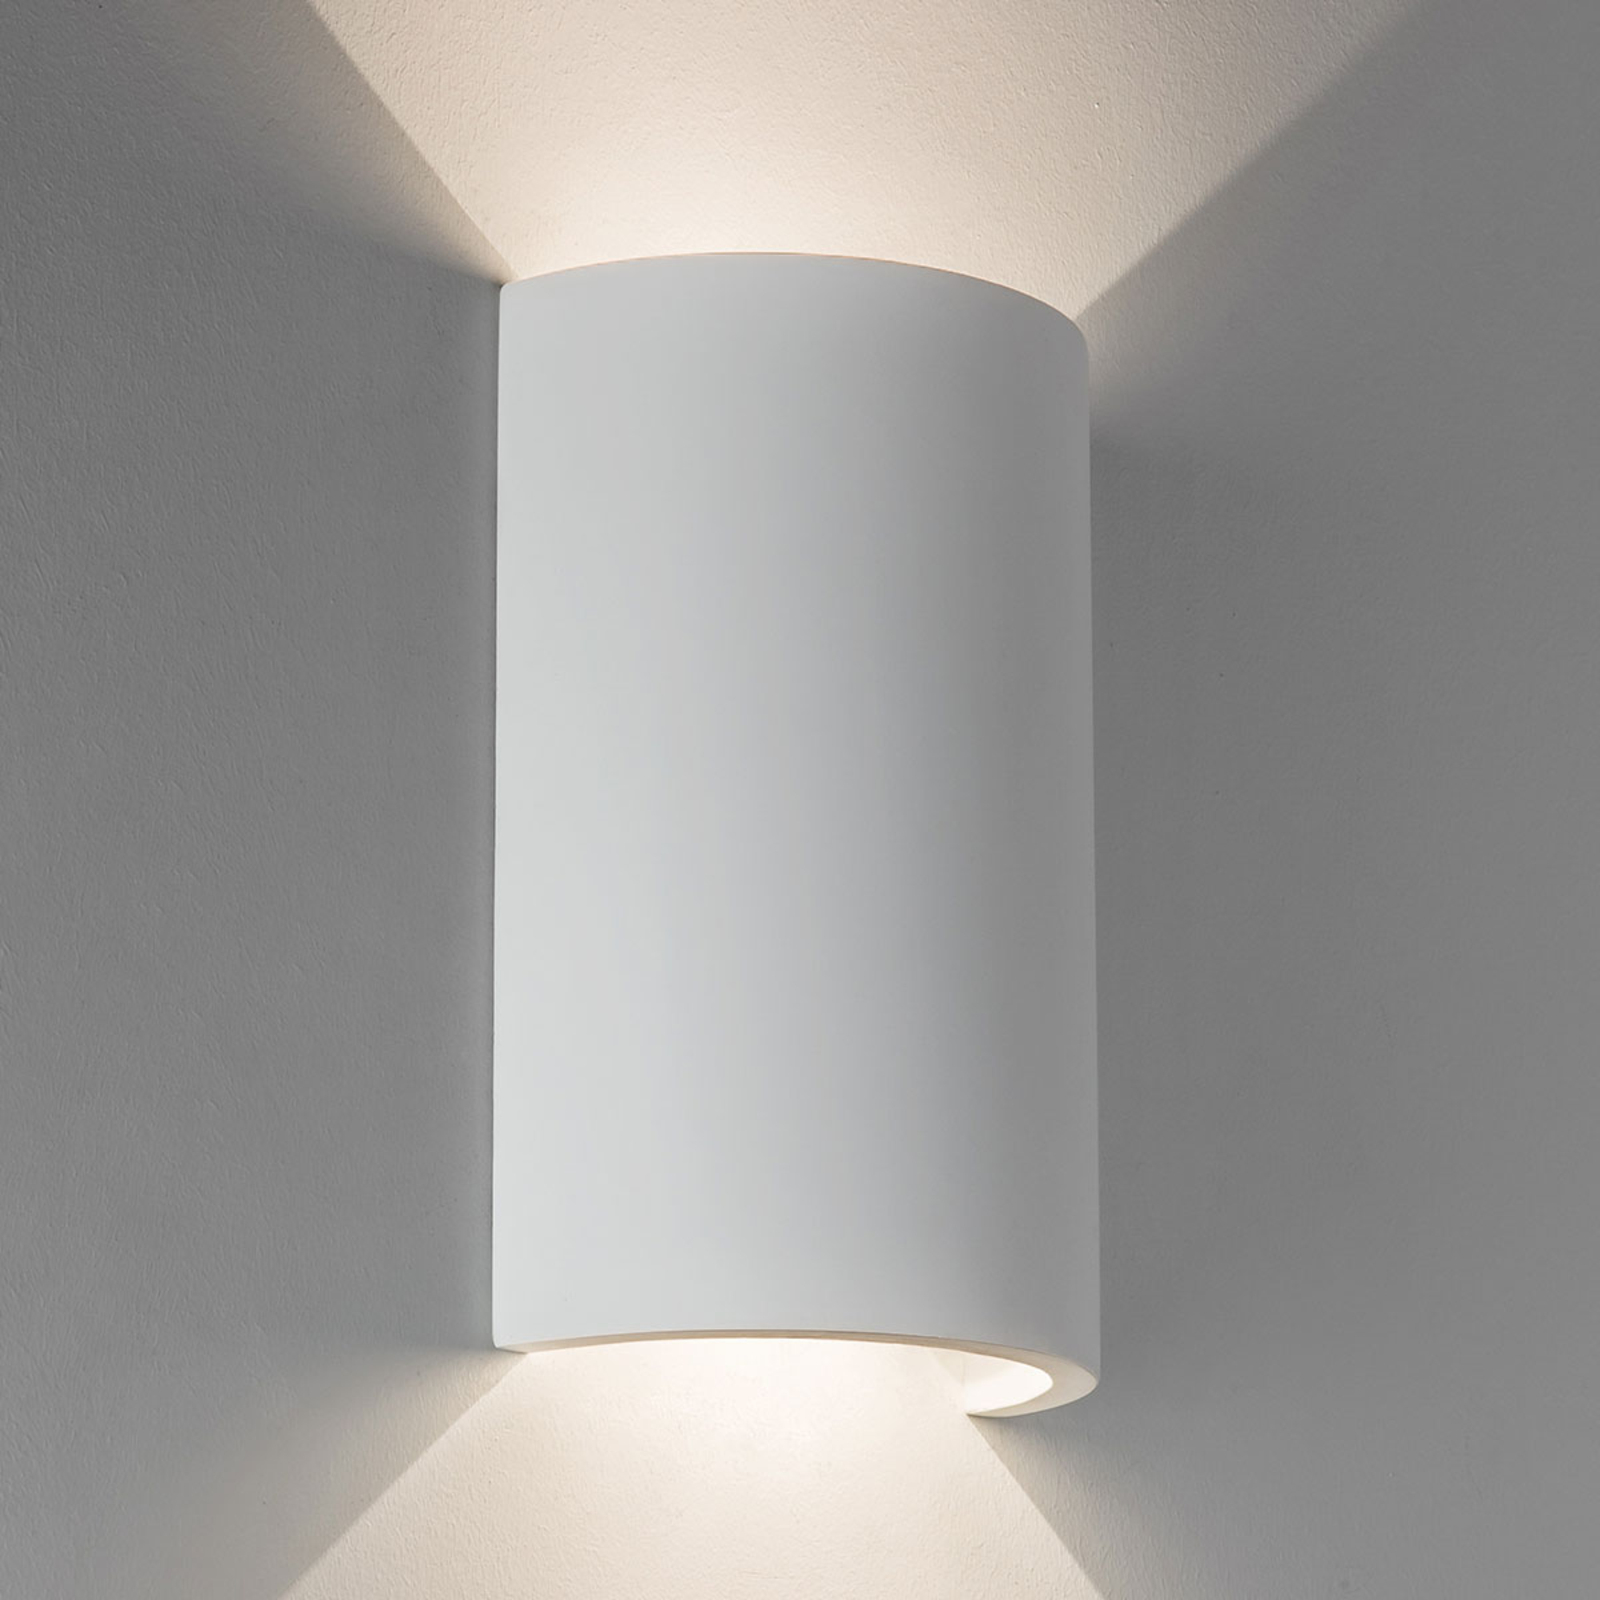 Paintable Serifos LED wall light 170, plaster